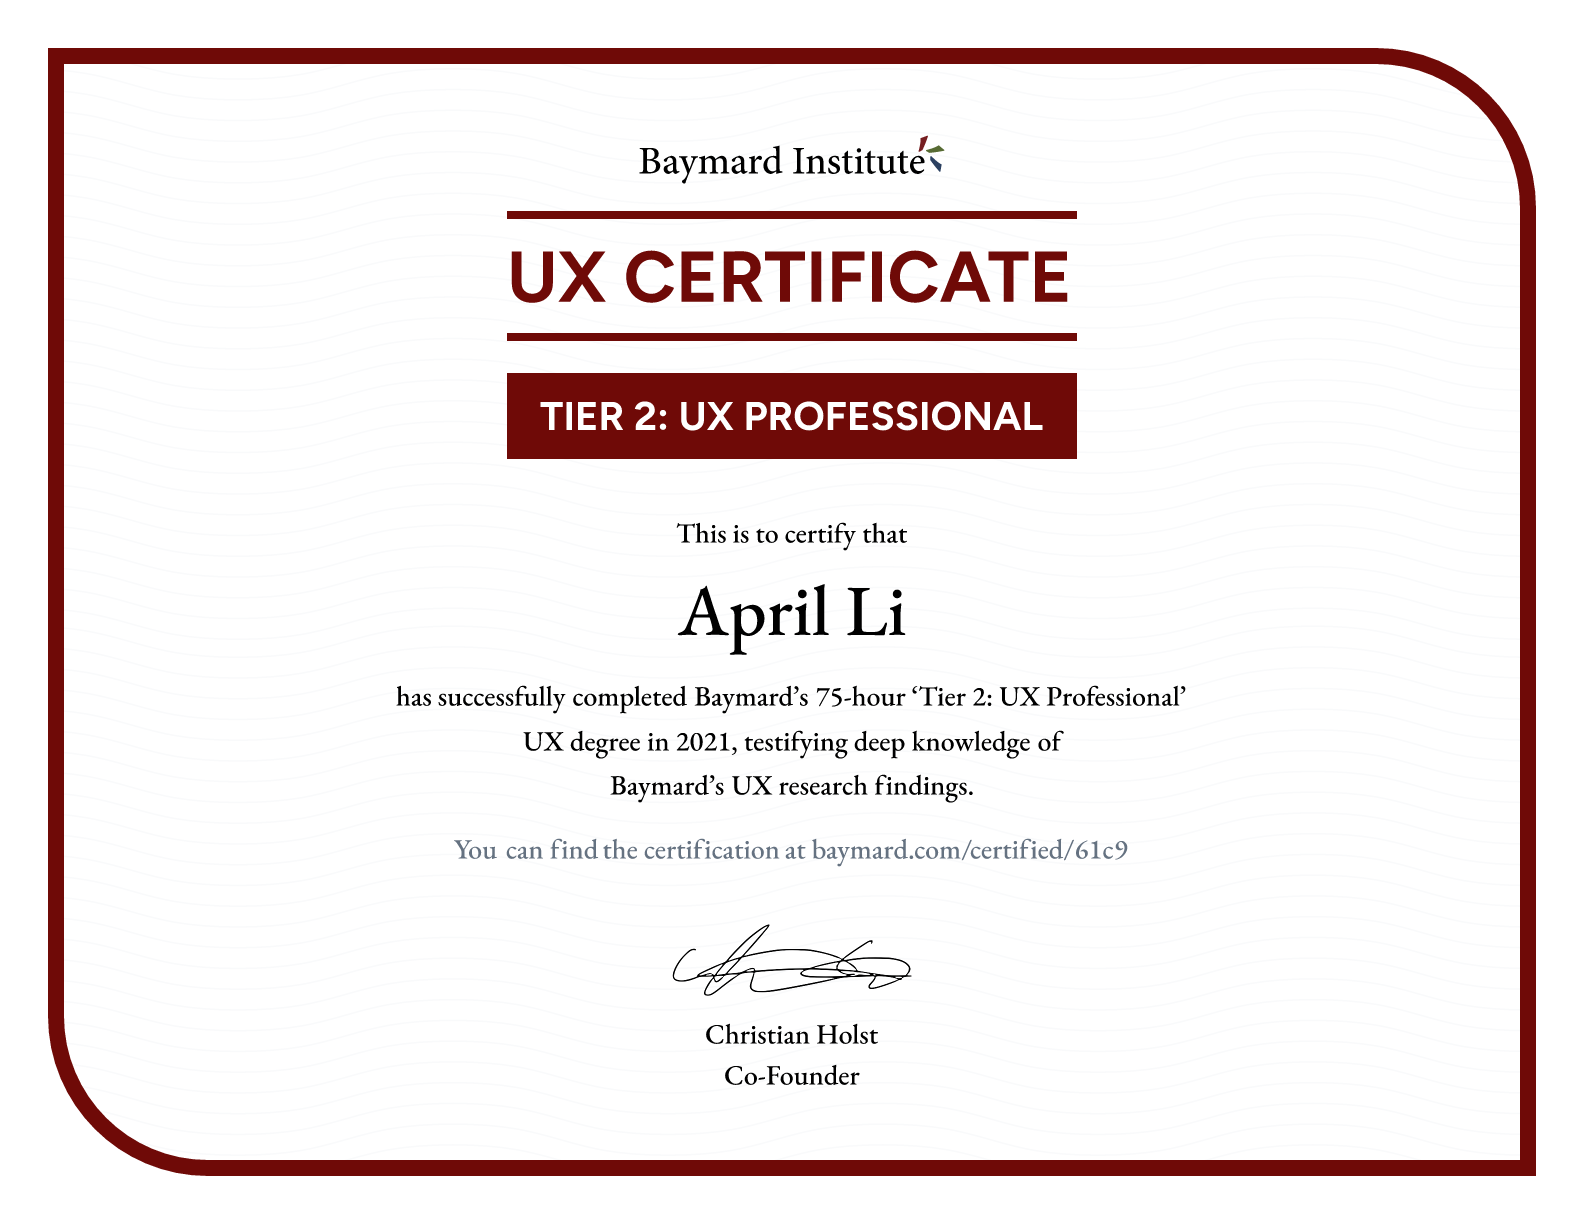 April Li’s certificate